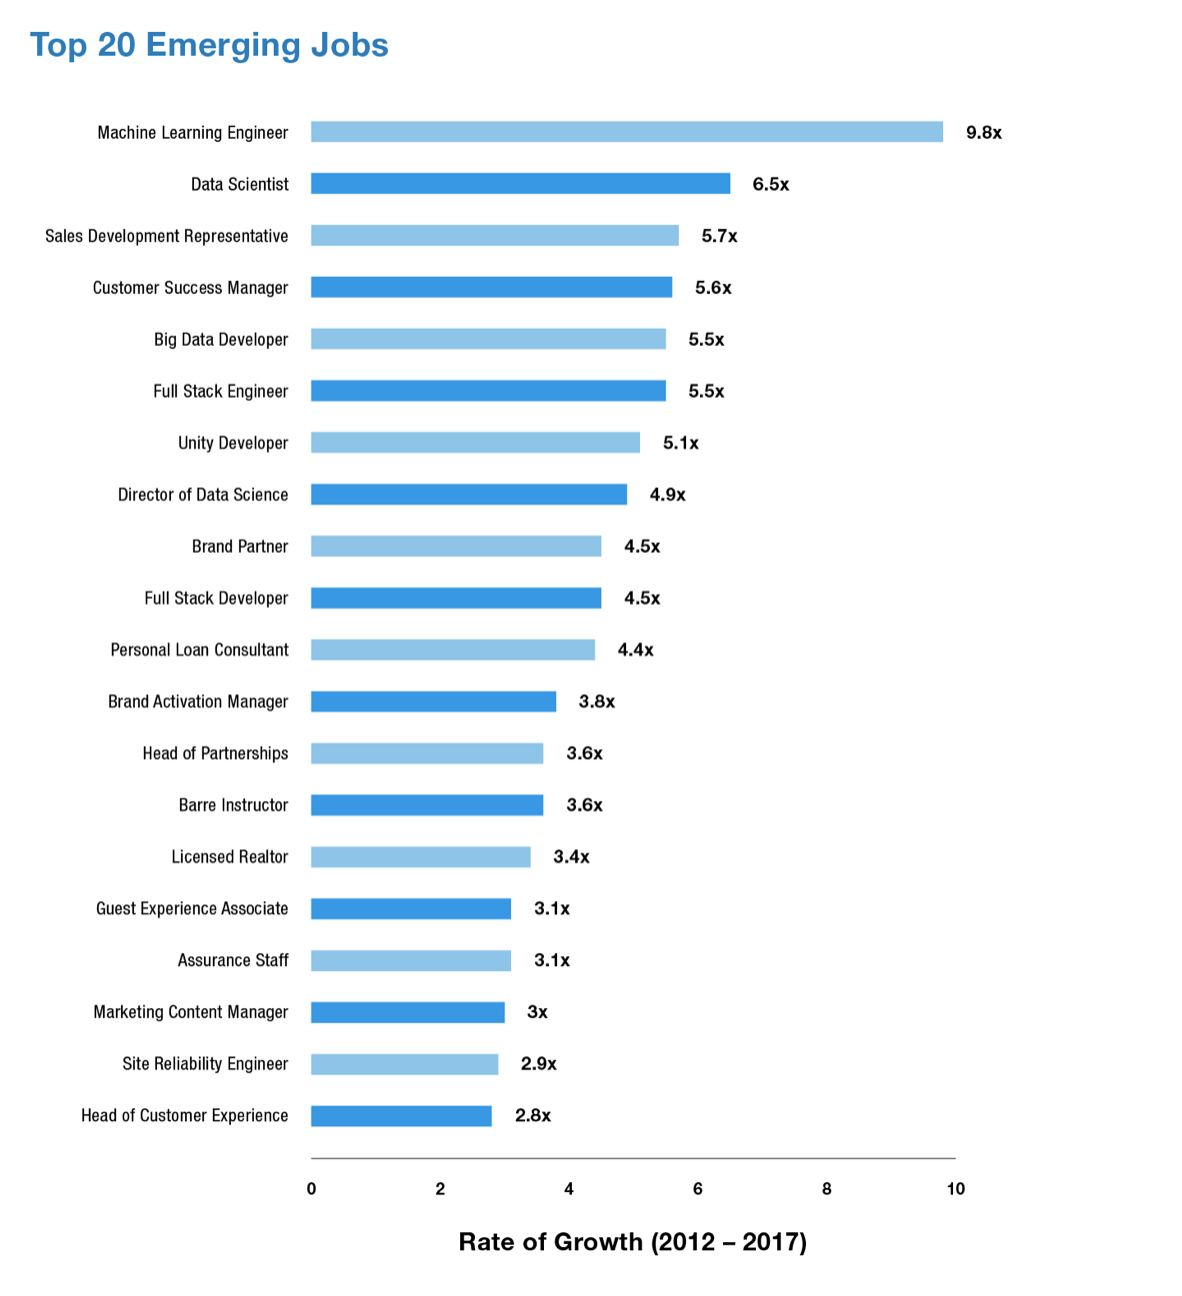 LinkedIn’s U.S. Emerging Jobs Report